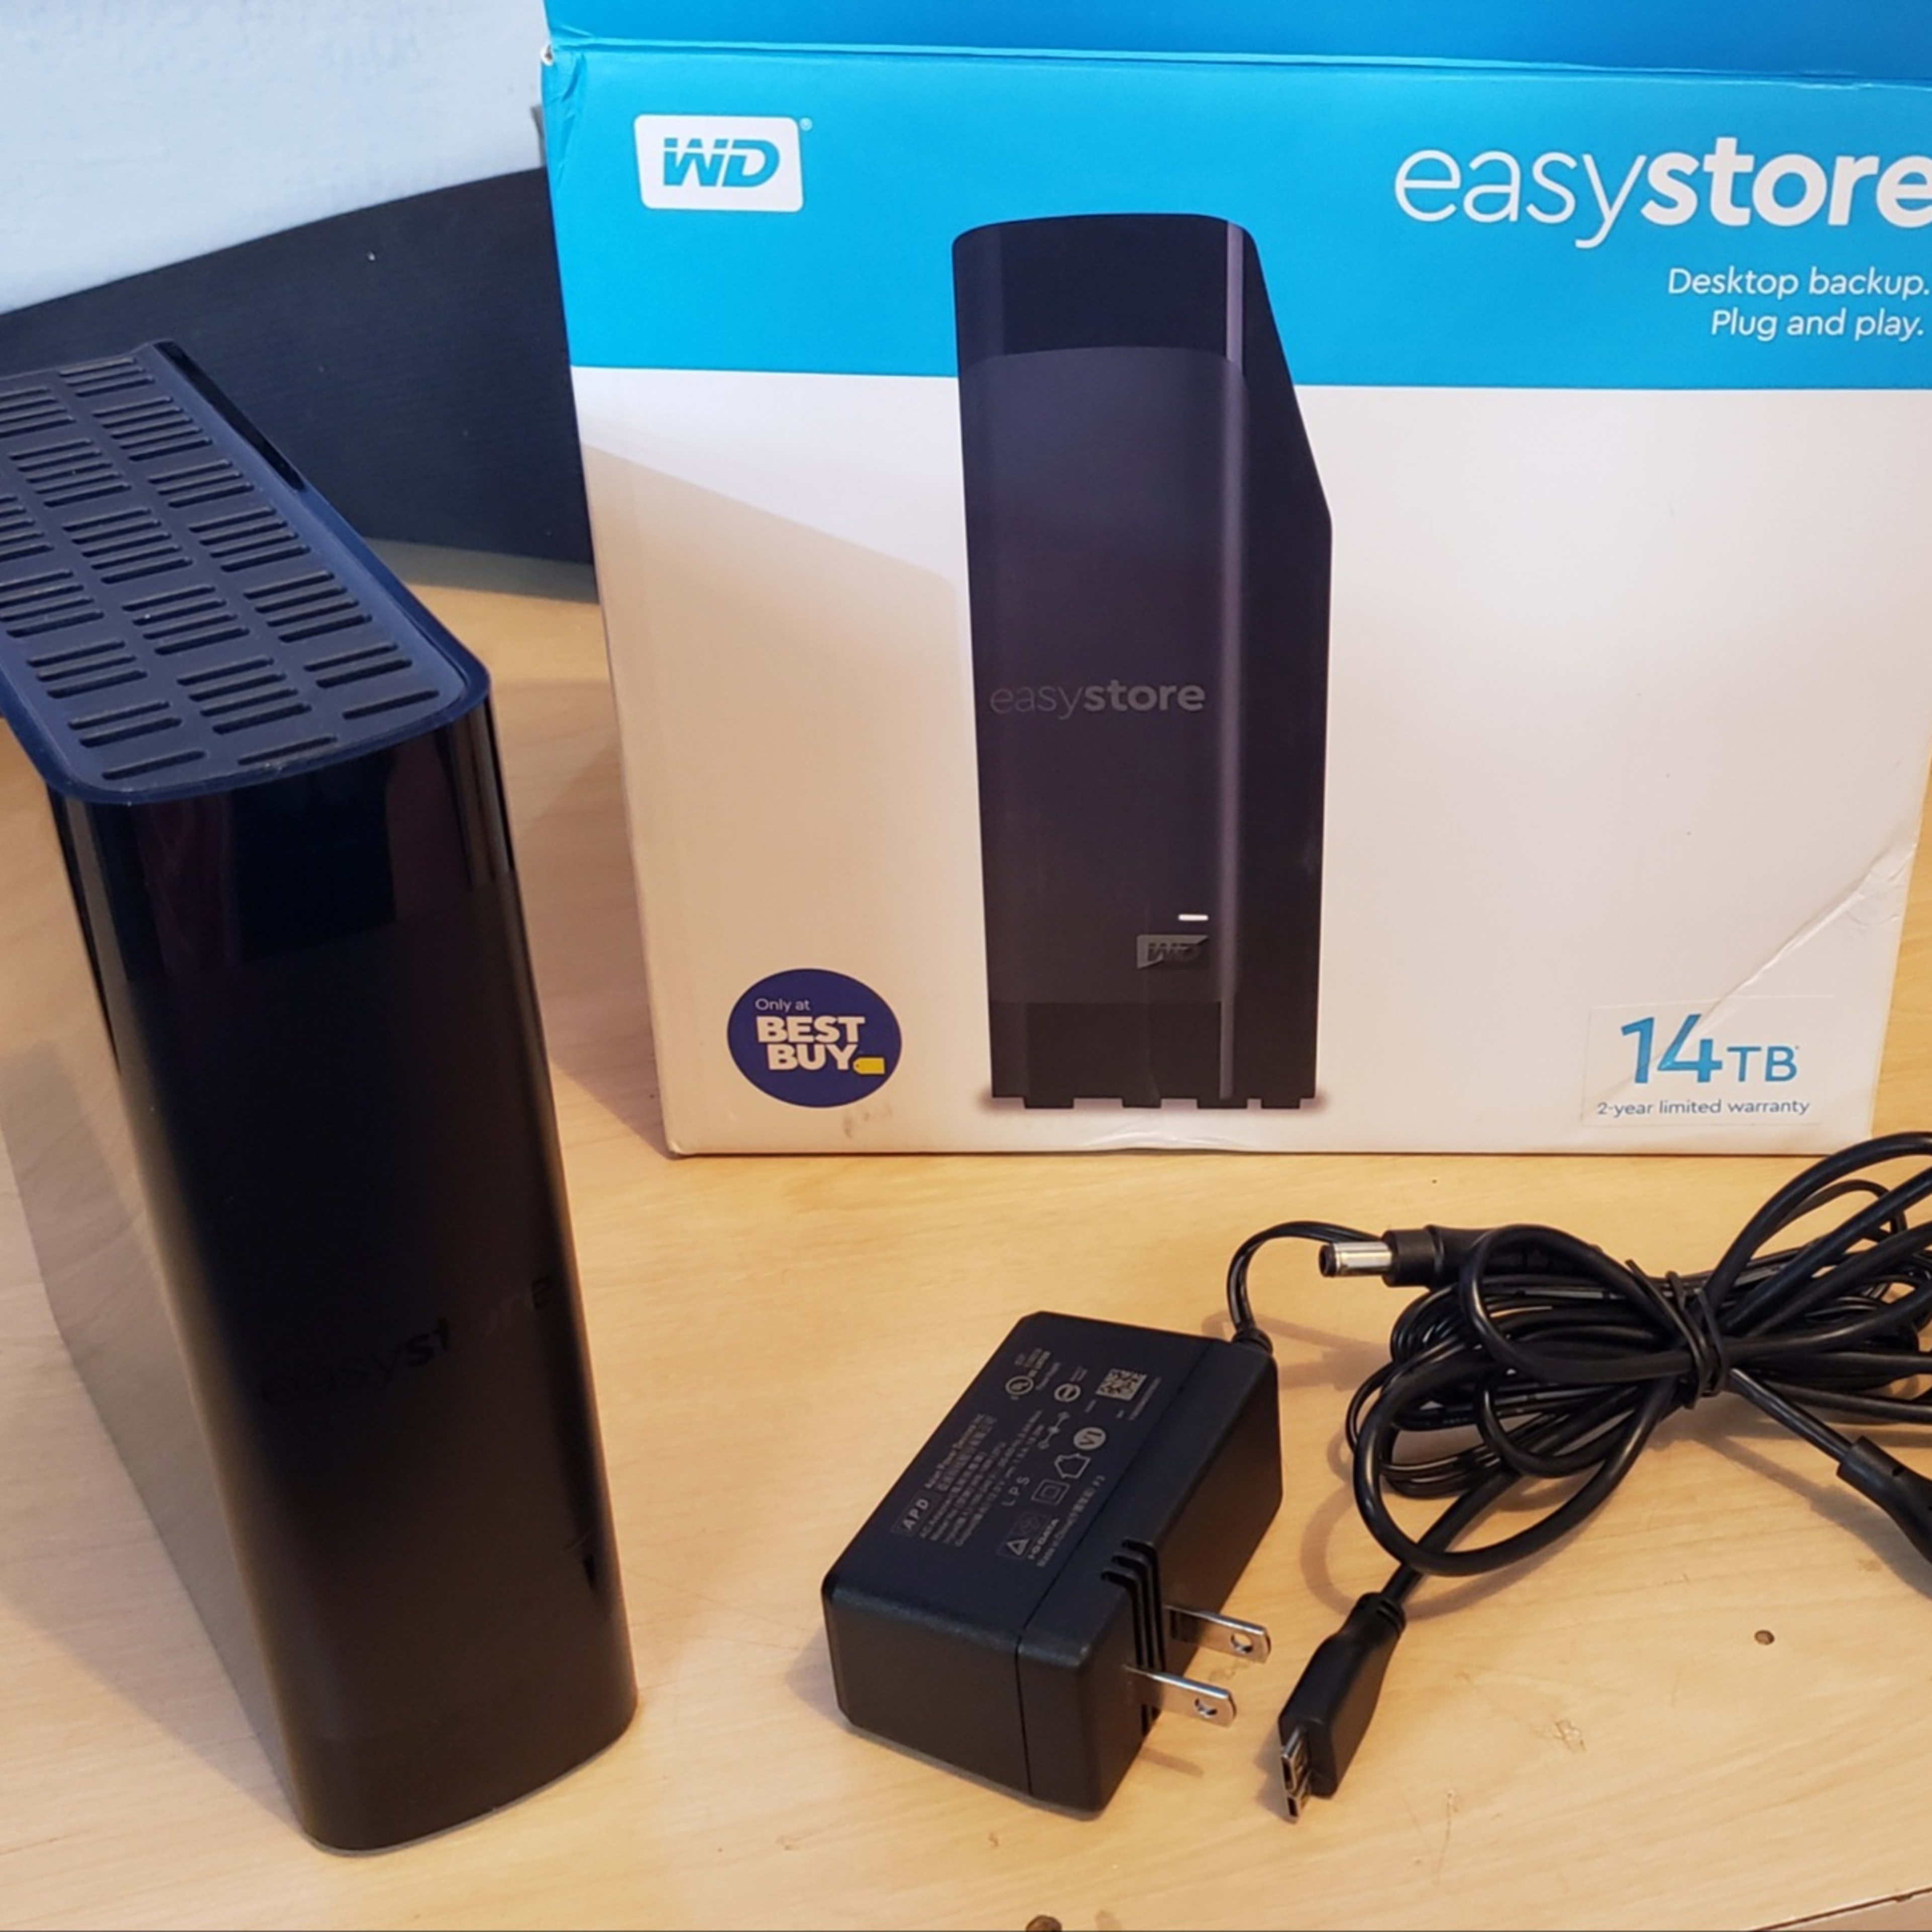 WD - Easystore 14TB External USB 3.0 Hard Drive - Black - Used